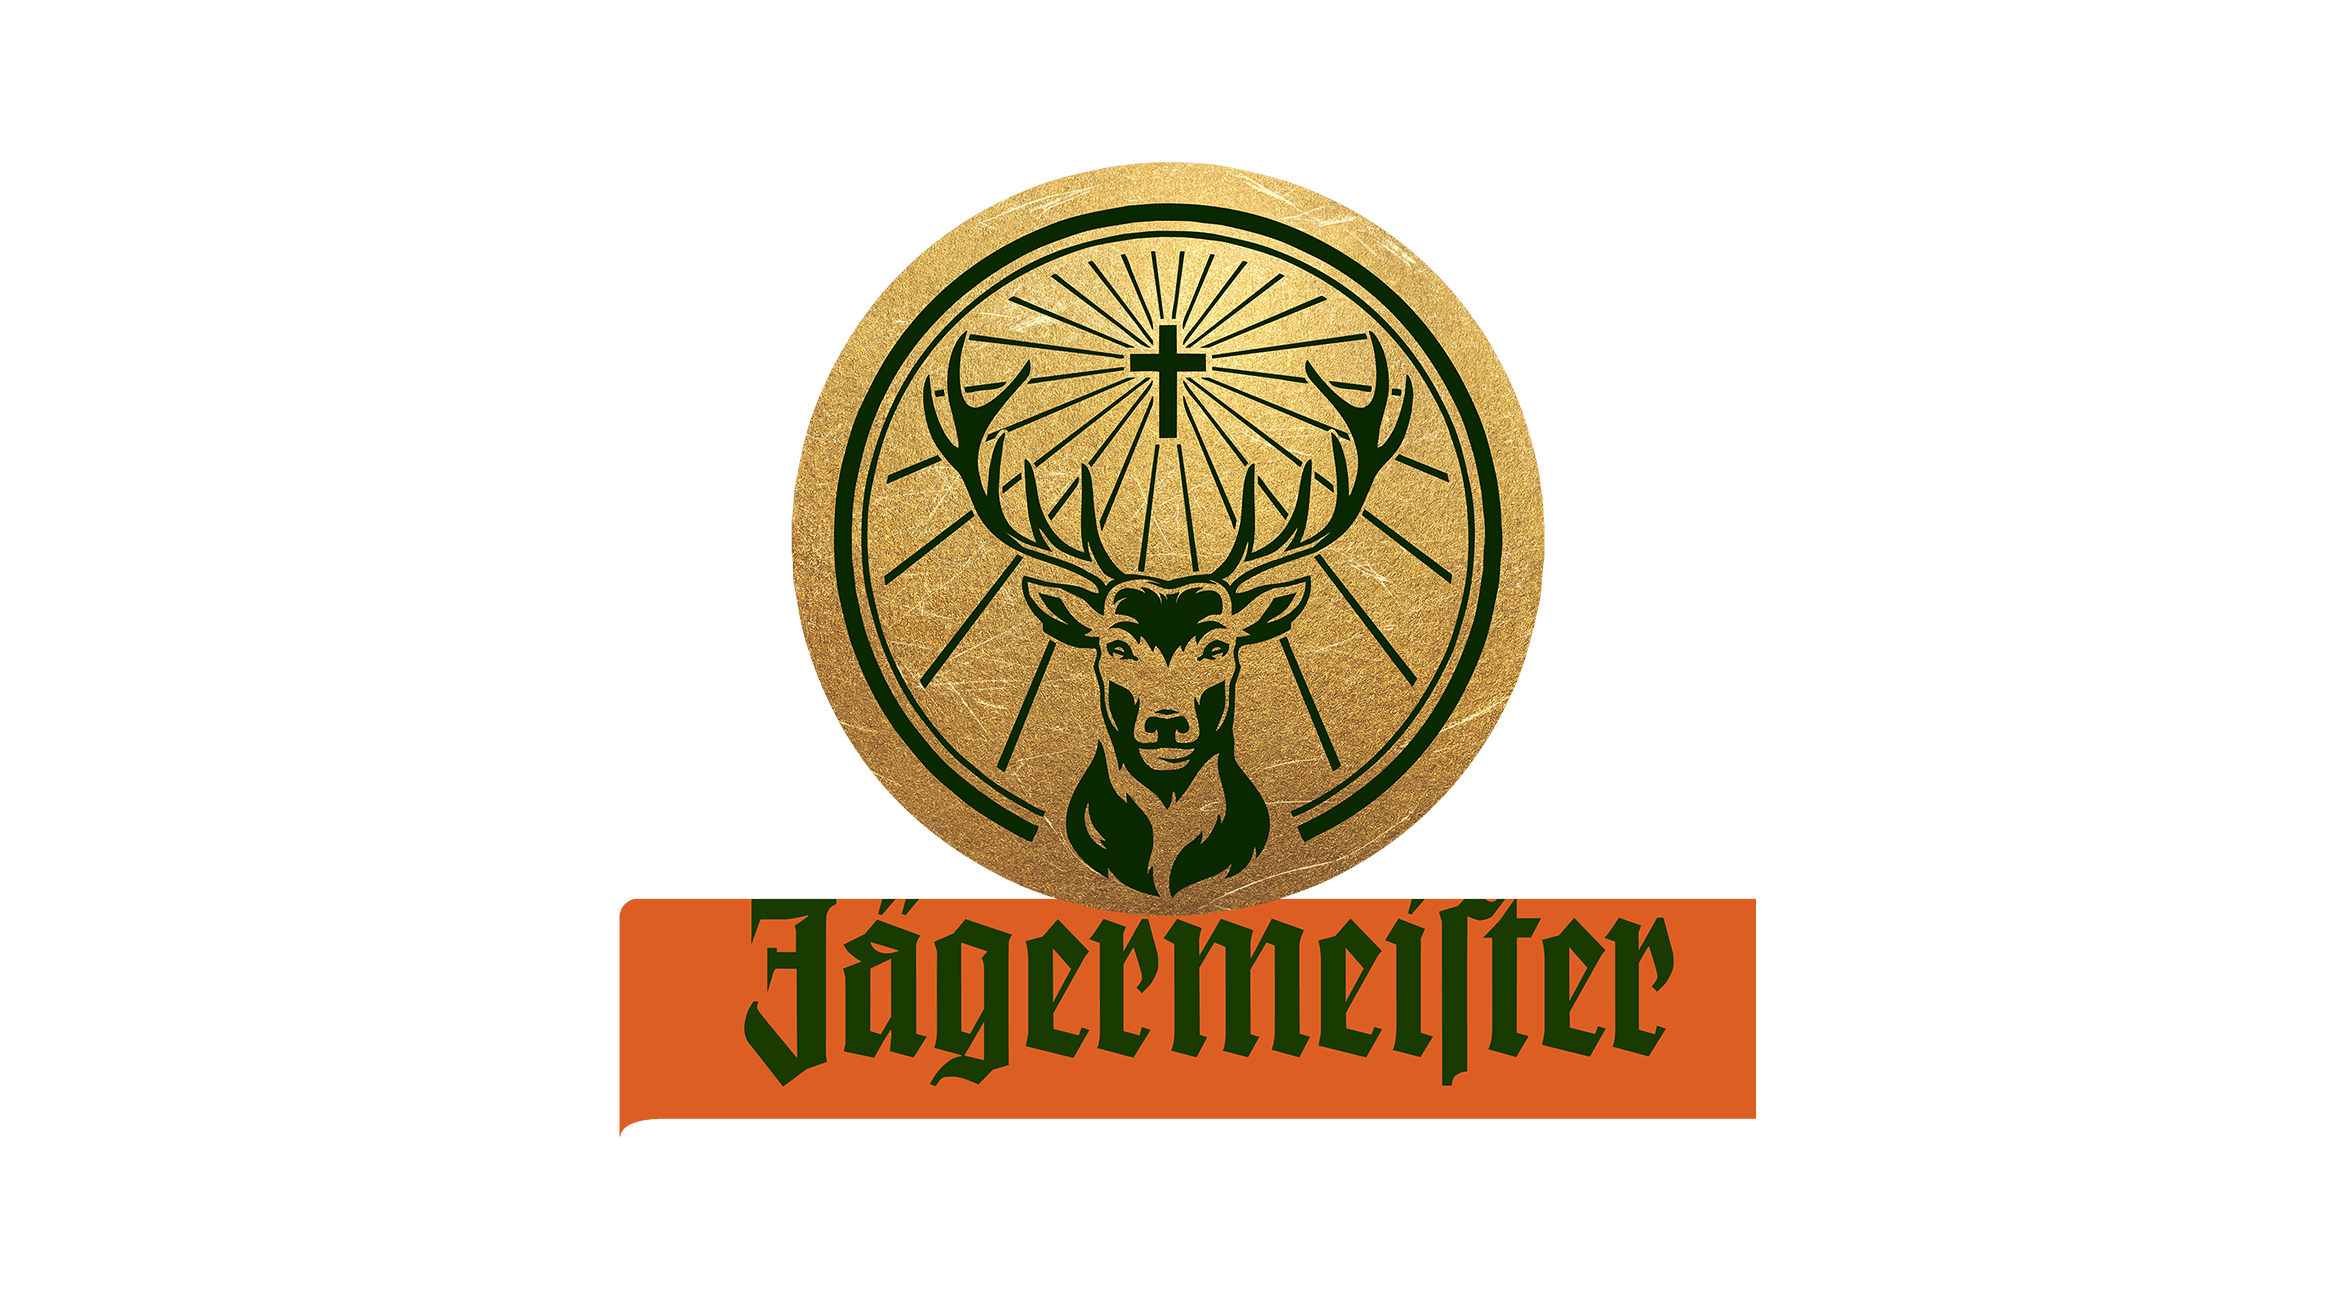 partners-logo-jagermeister-2